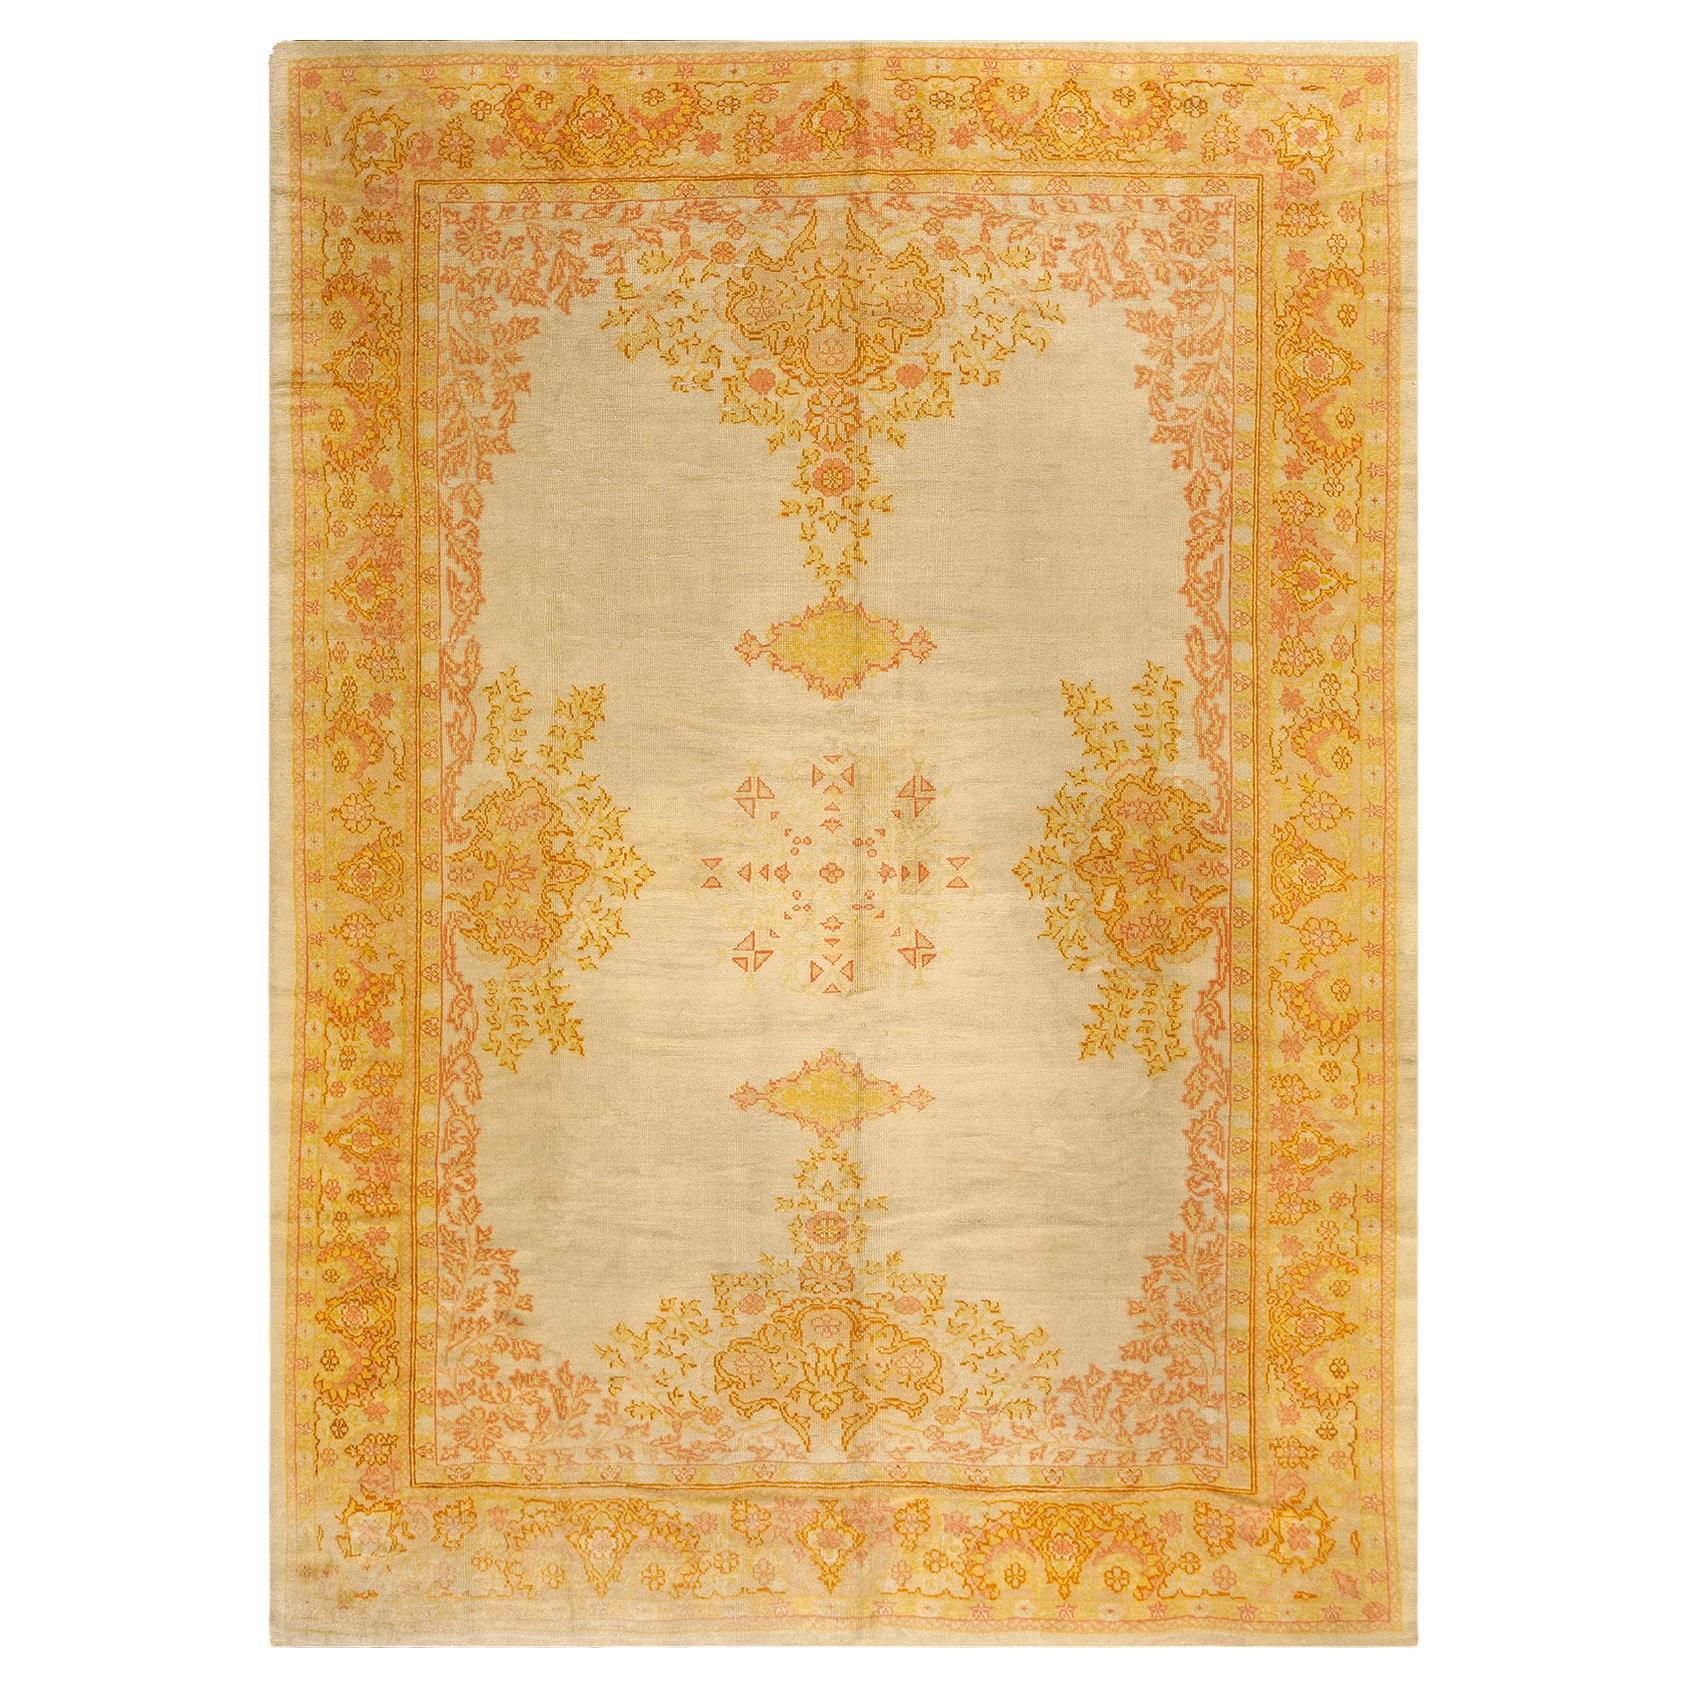 Early 20th Century Turkish Carpet ( 8'3" x 11'6" - 252 x 350 )